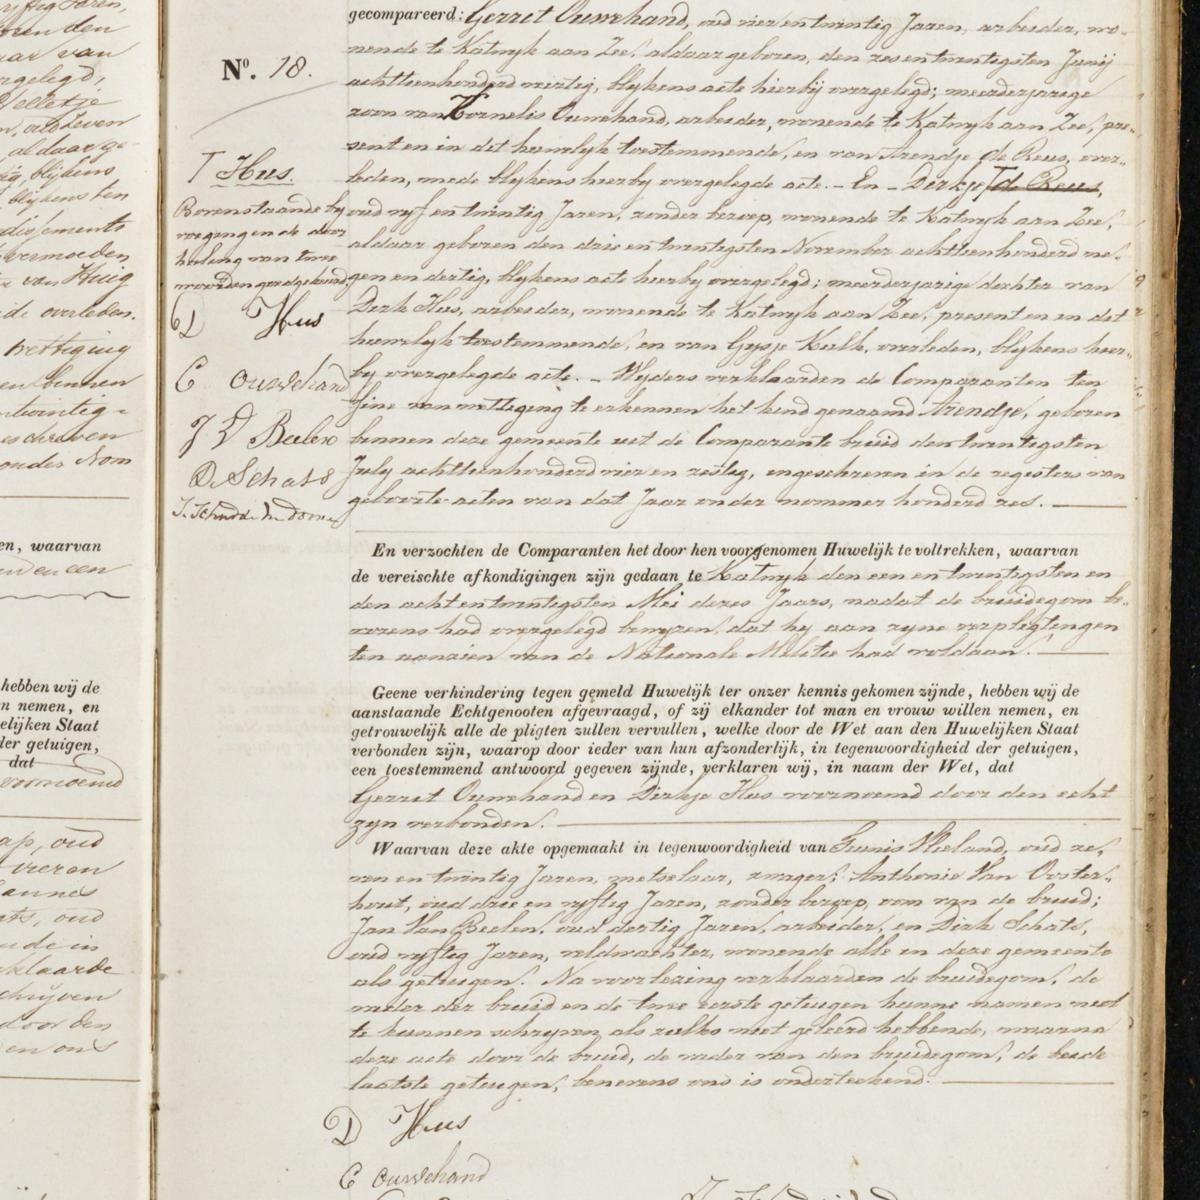 Civil registry of marriages, Katwijk, 1865, record 18